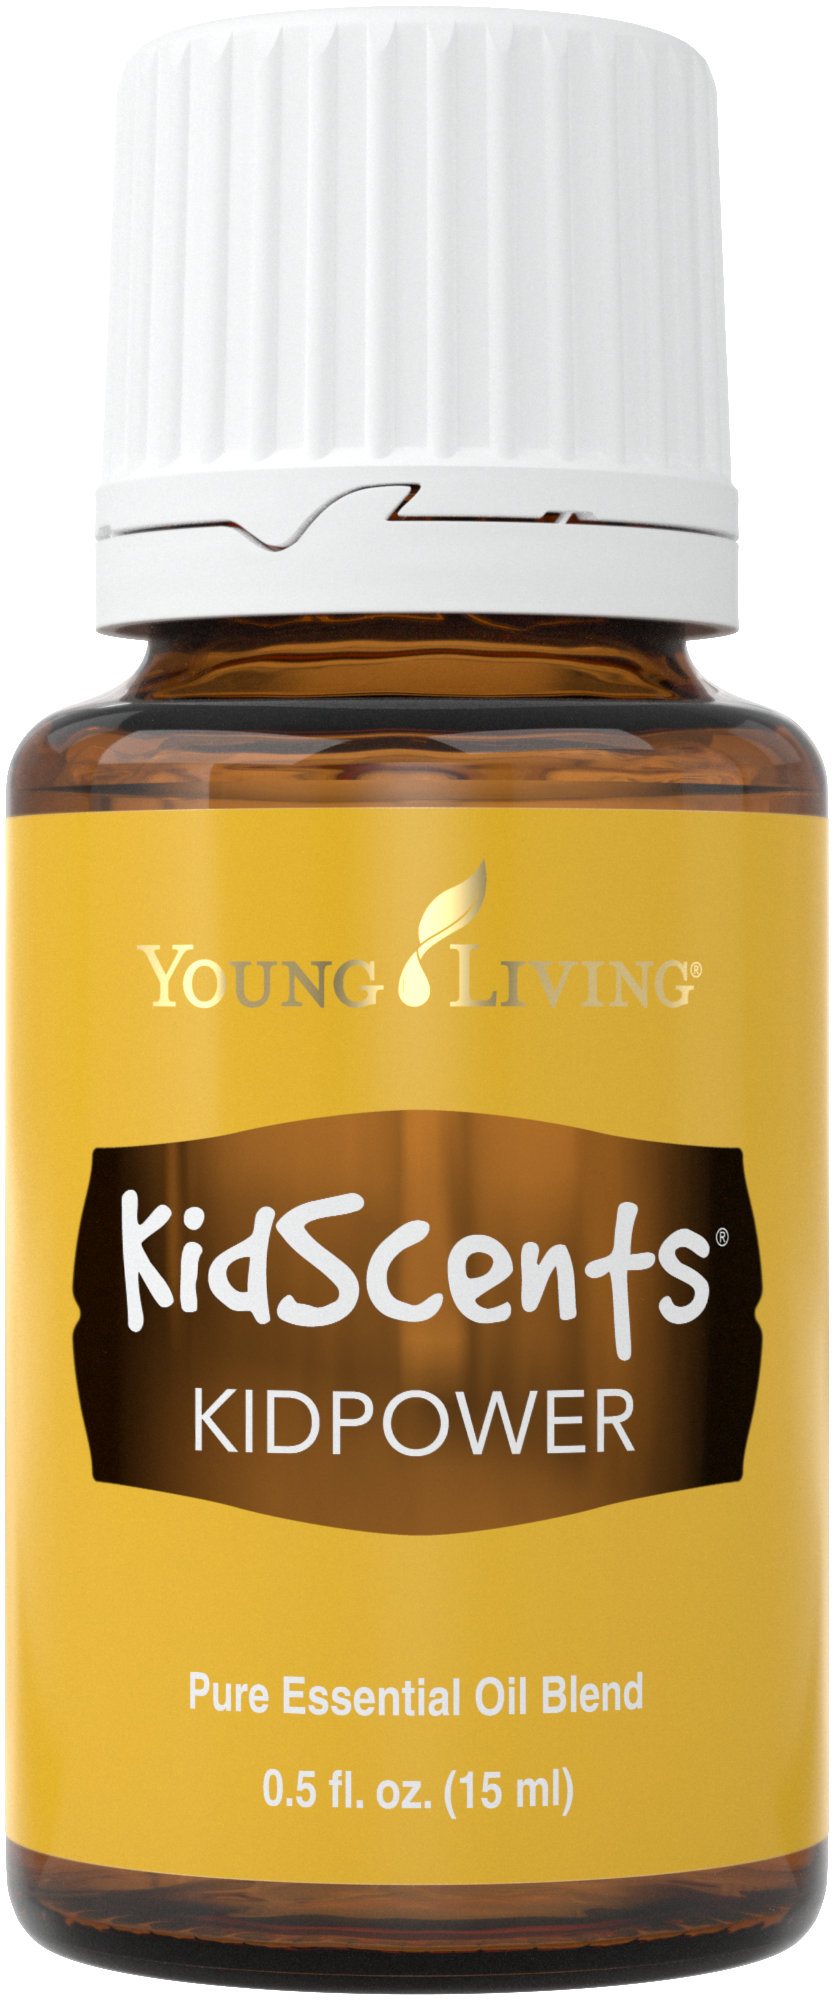 Kidscents KidPower 15ml Silo.png